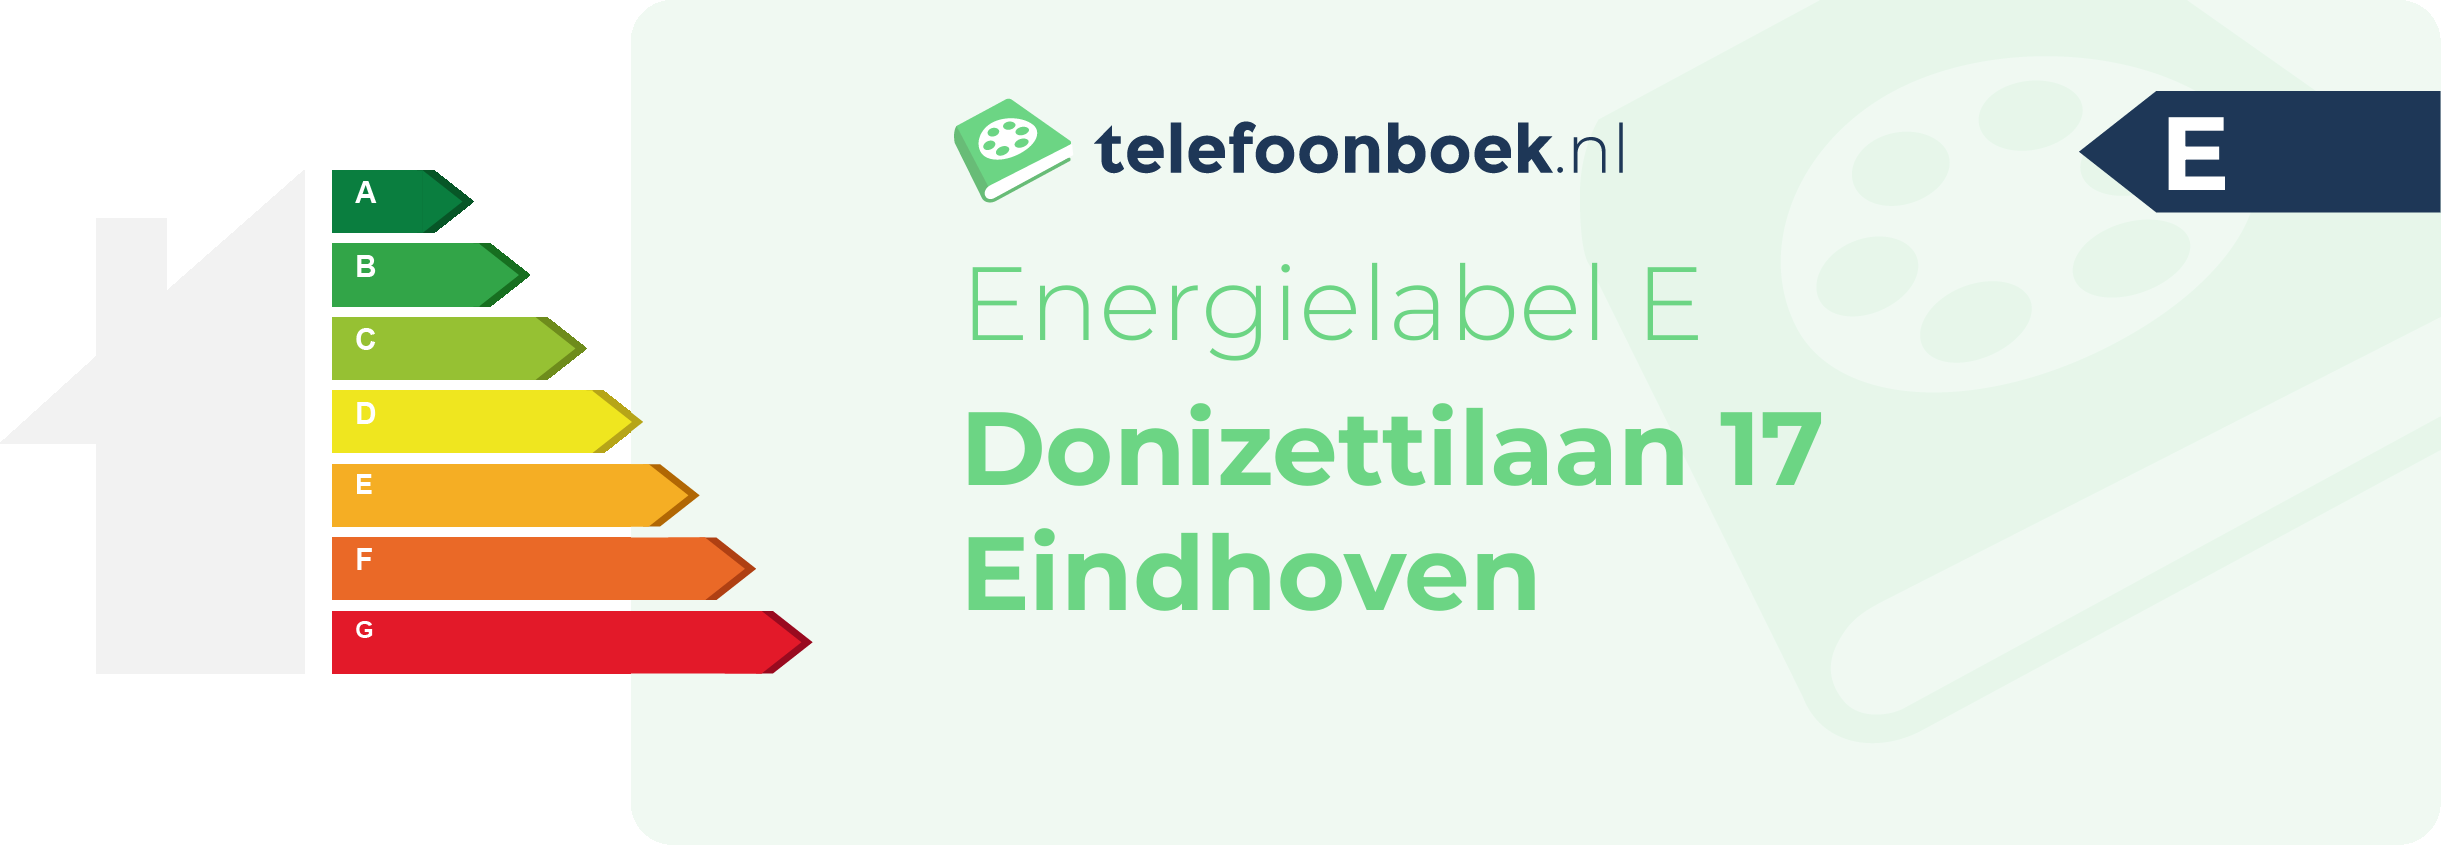 Energielabel Donizettilaan 17 Eindhoven